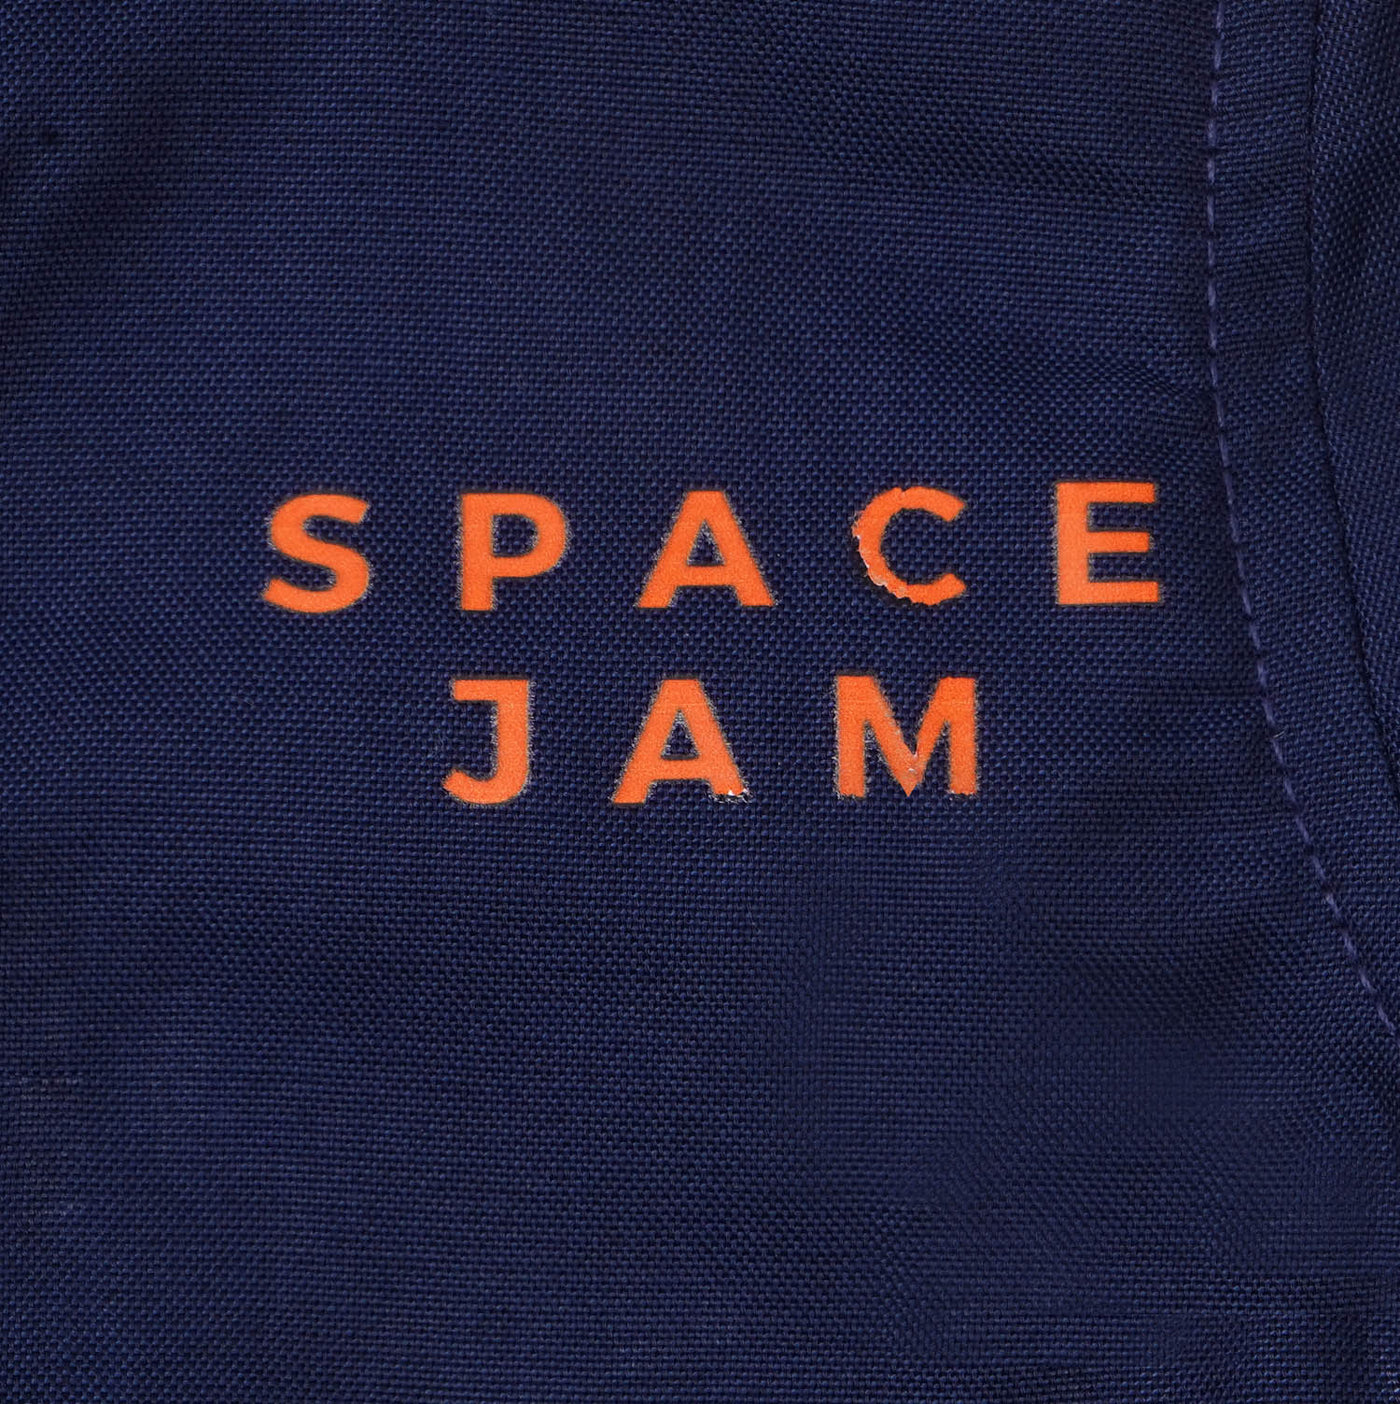 Infant Boys Oxford Casual Shirt Space Jam - Navy